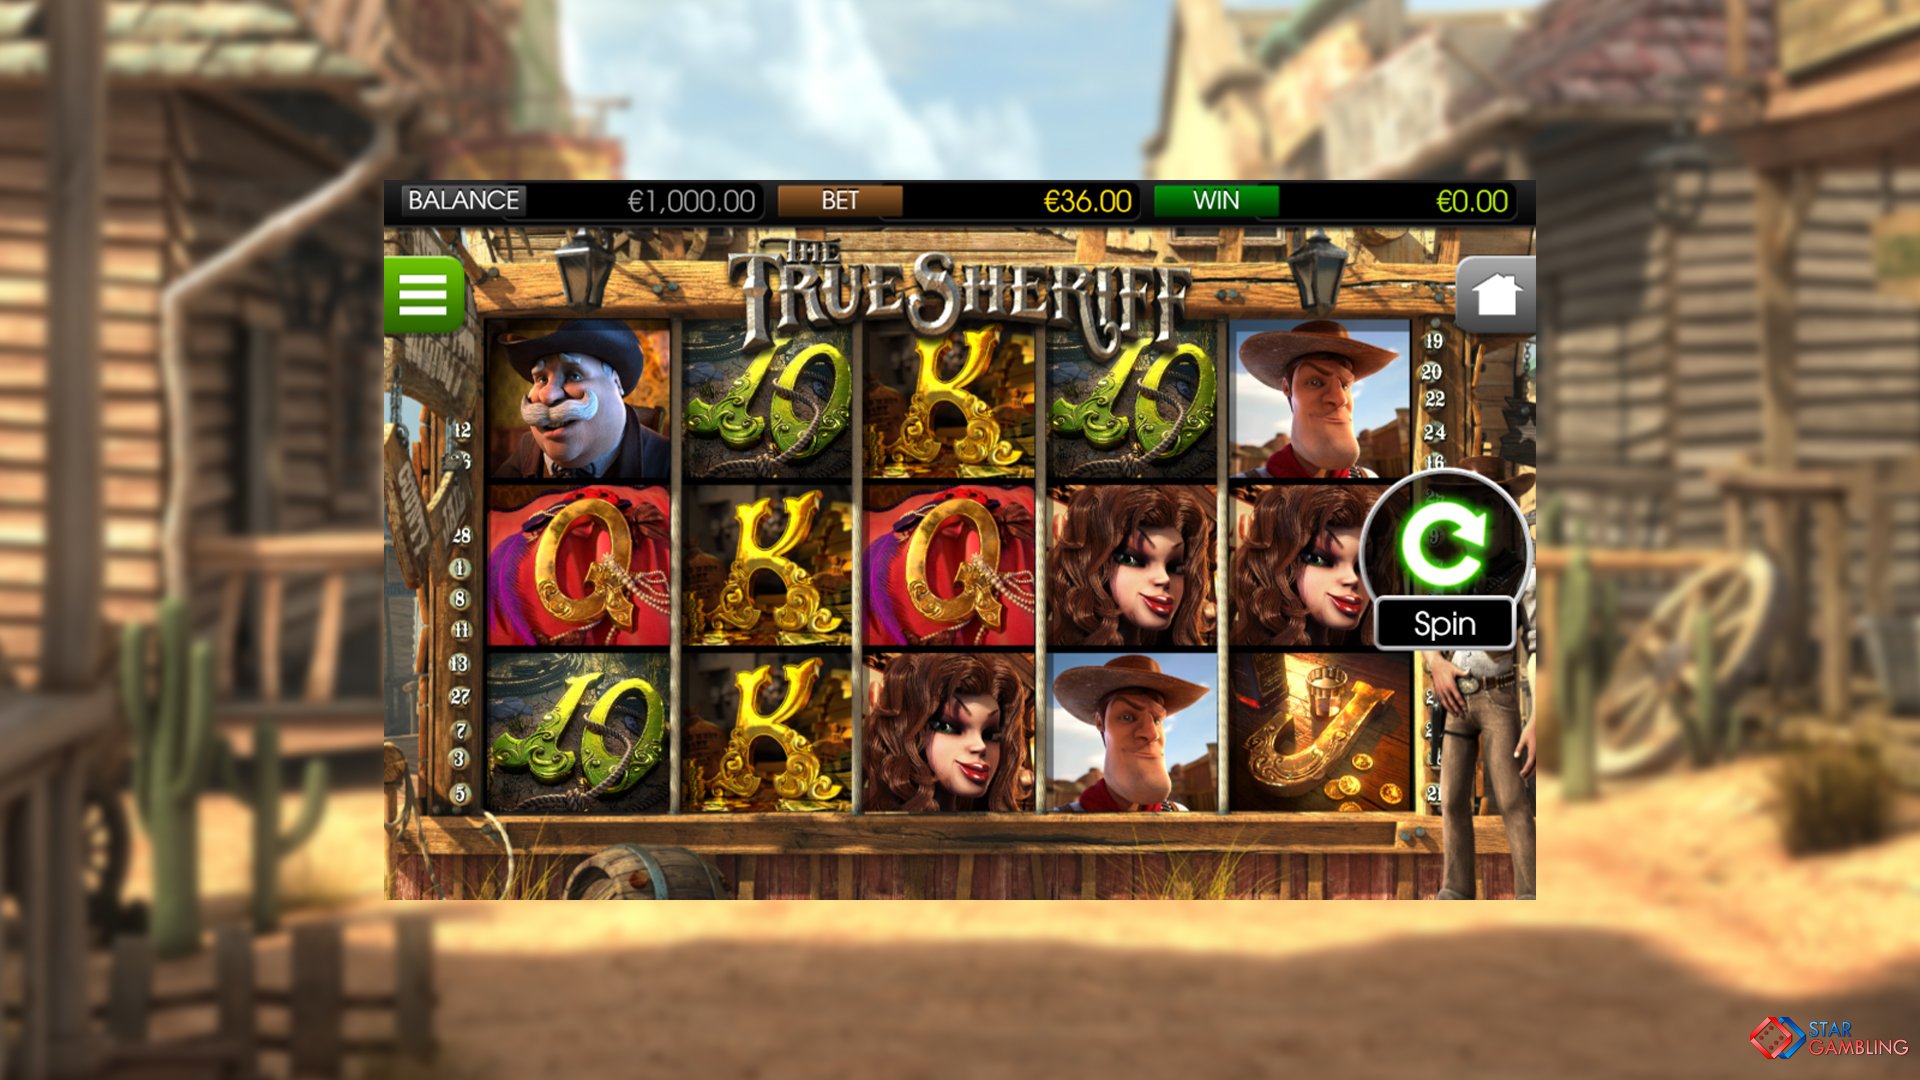 The True Sheriff screenshot #1